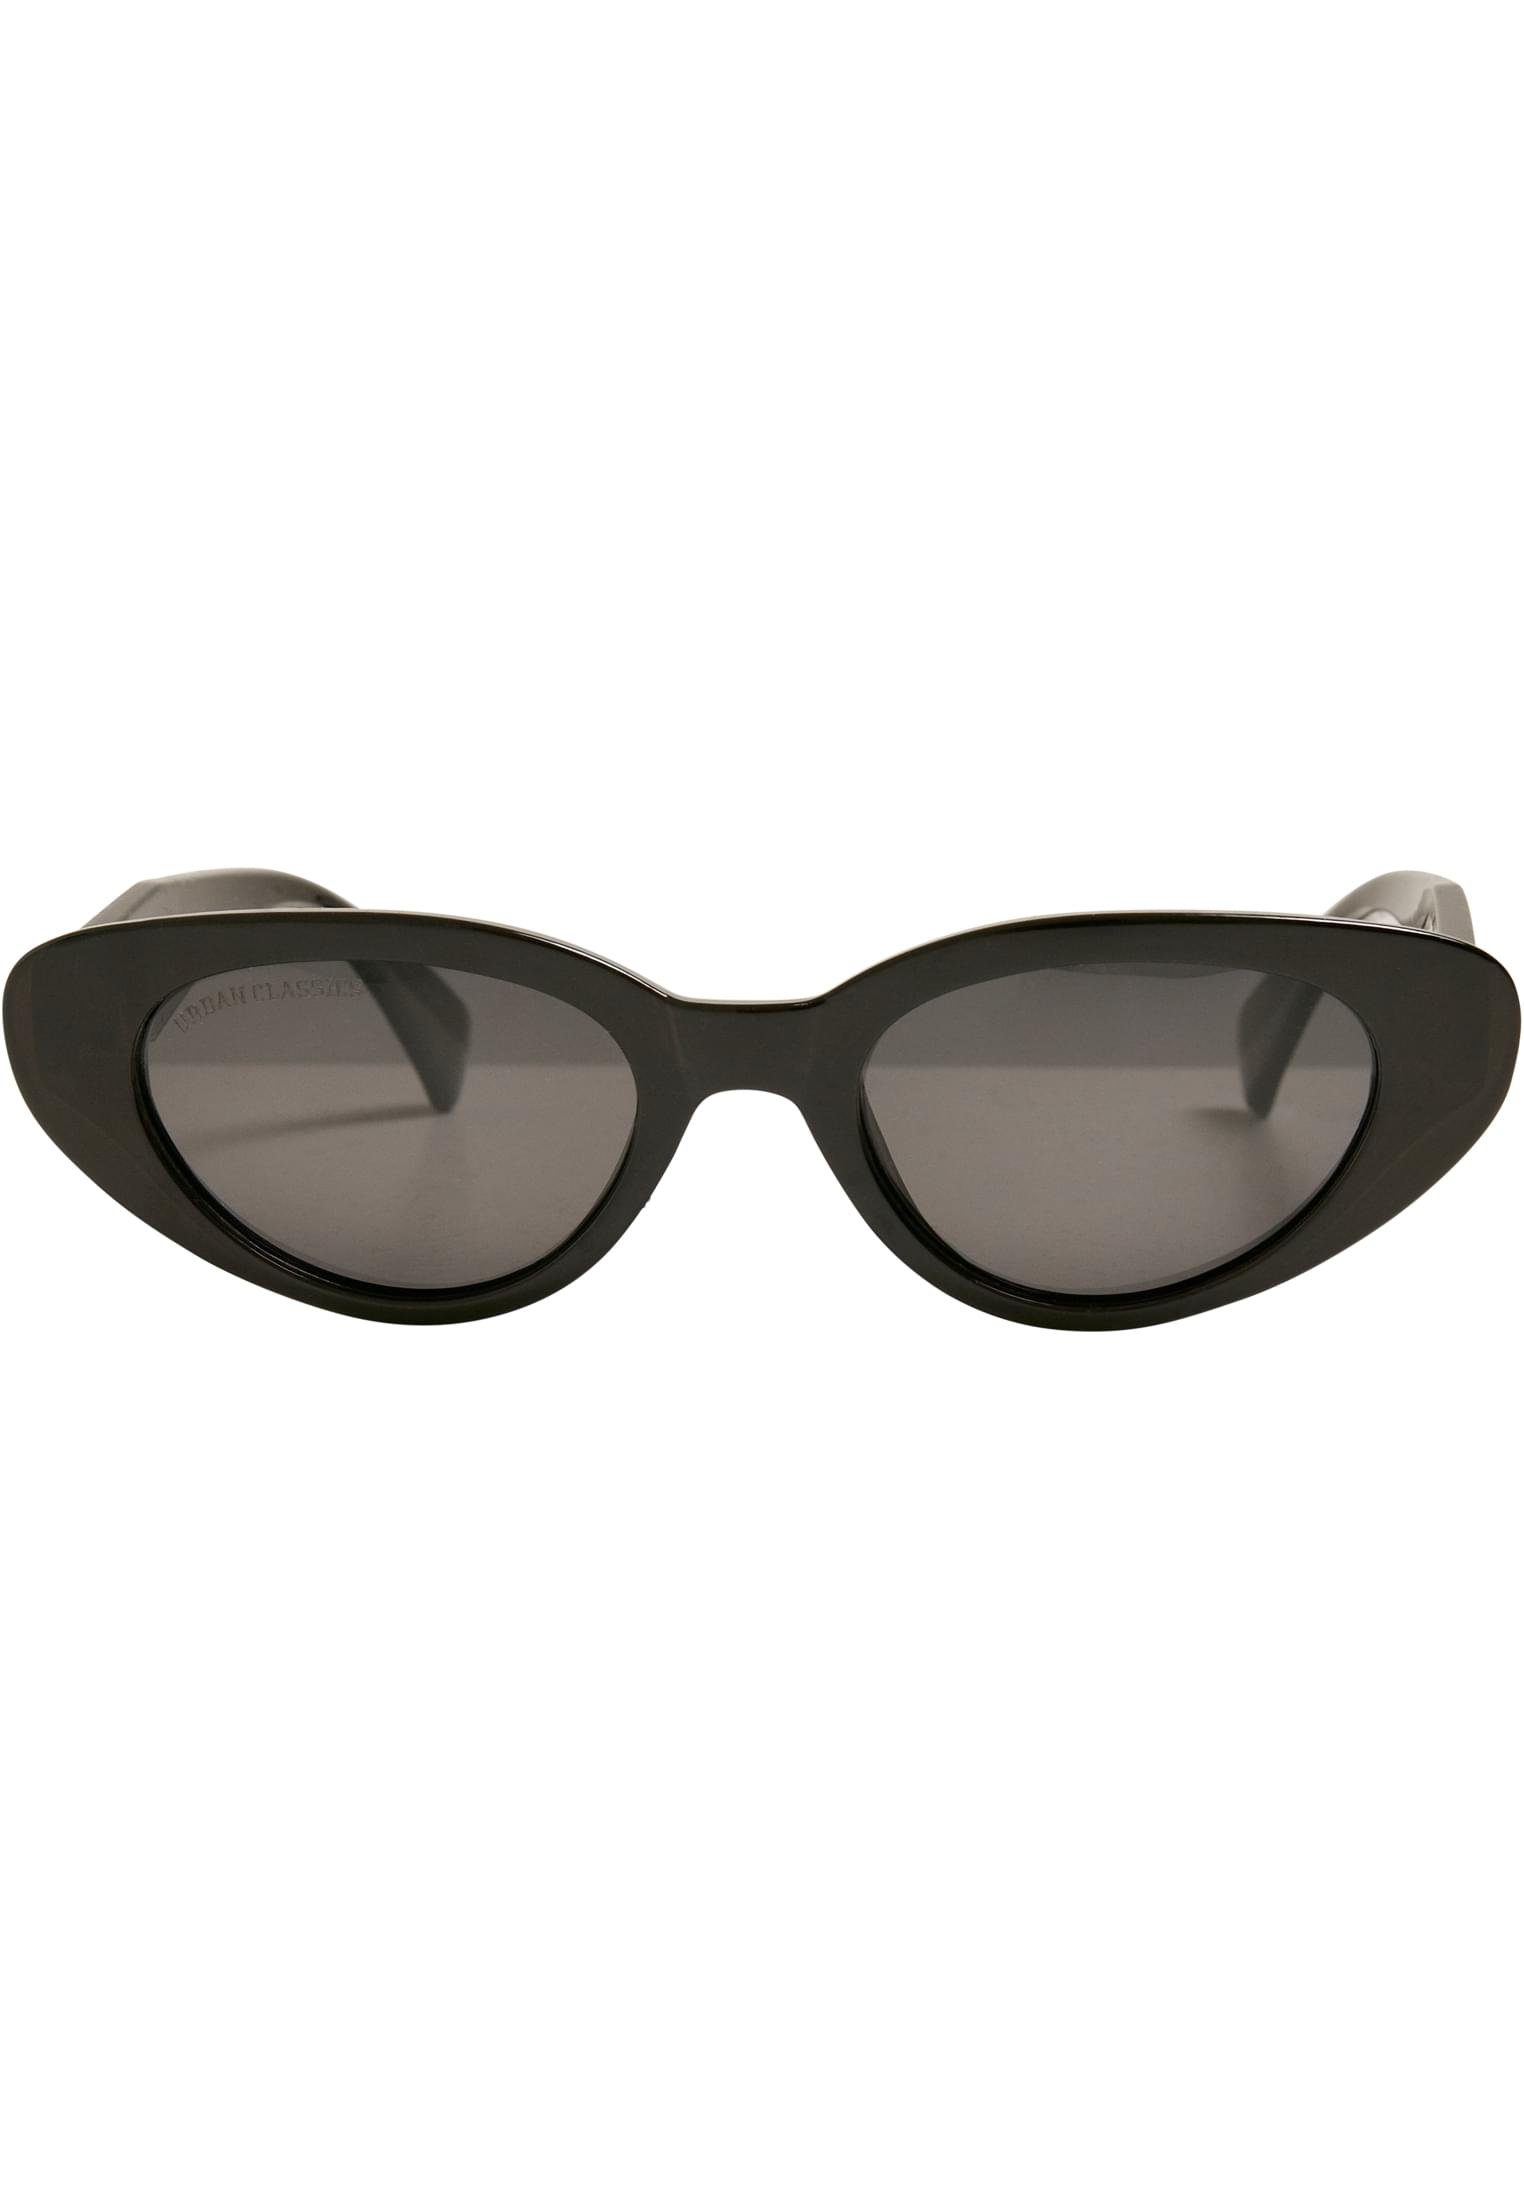 Sunglasses CLASSICS Puerto Rico Unisex URBAN Sonnenbrille Chain With black